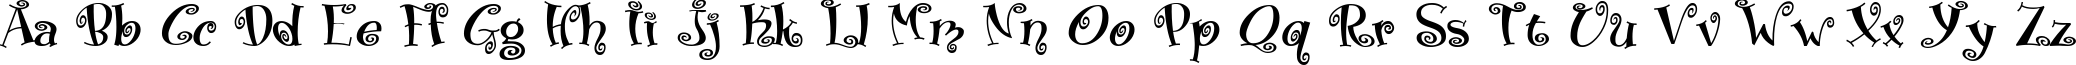 Пример написания английского алфавита шрифтом Matreshka